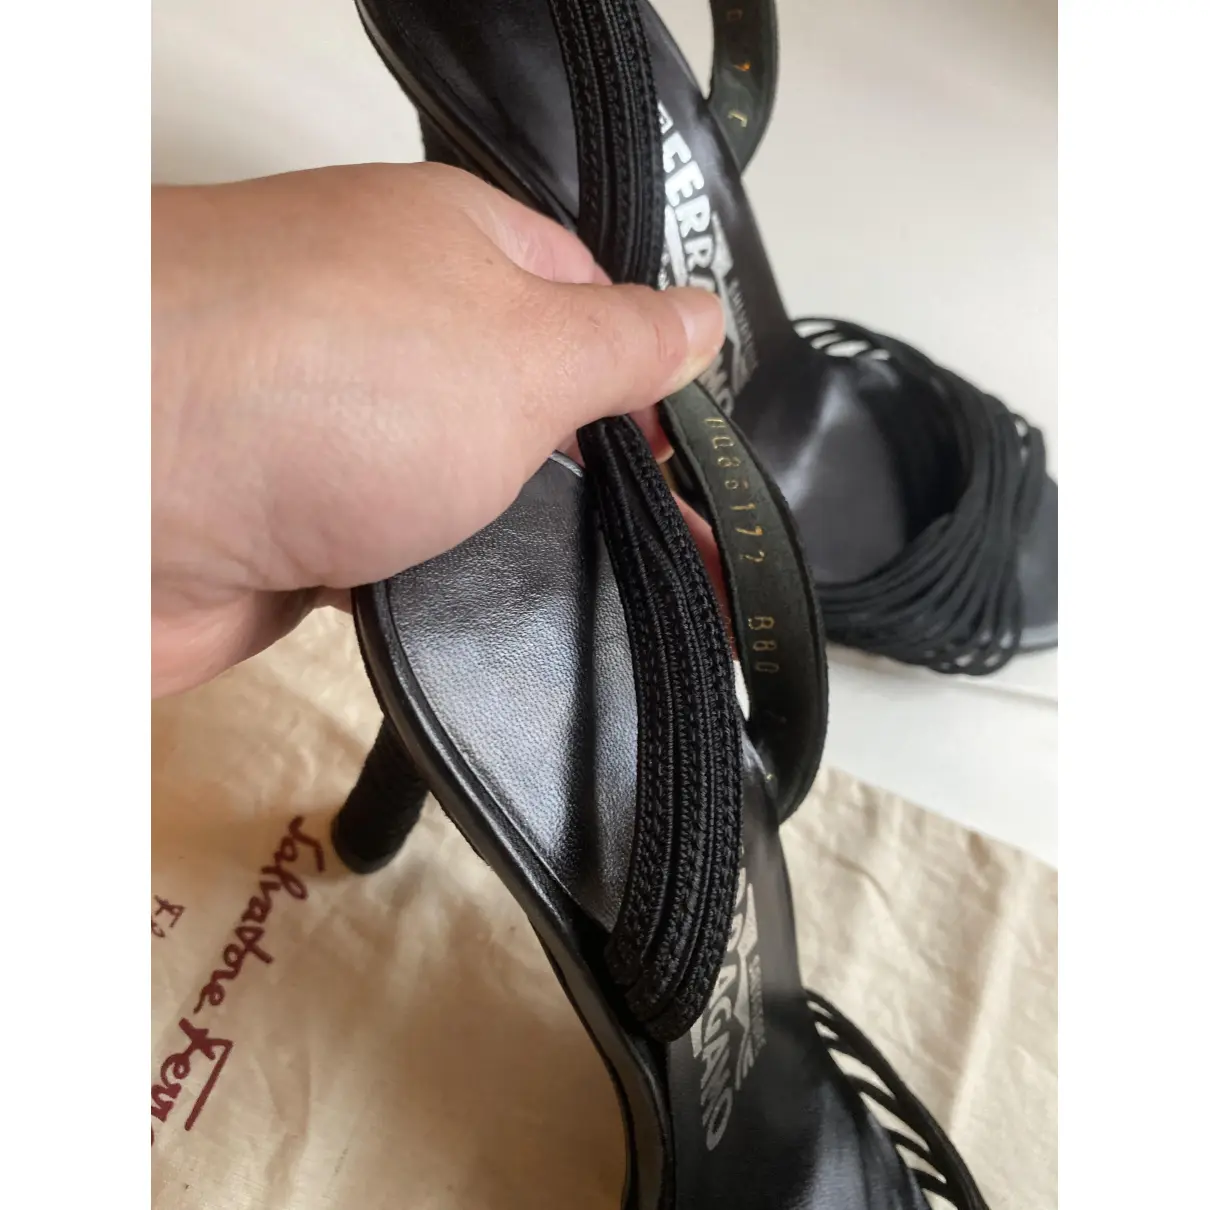 Buy Salvatore Ferragamo Leather sandals online